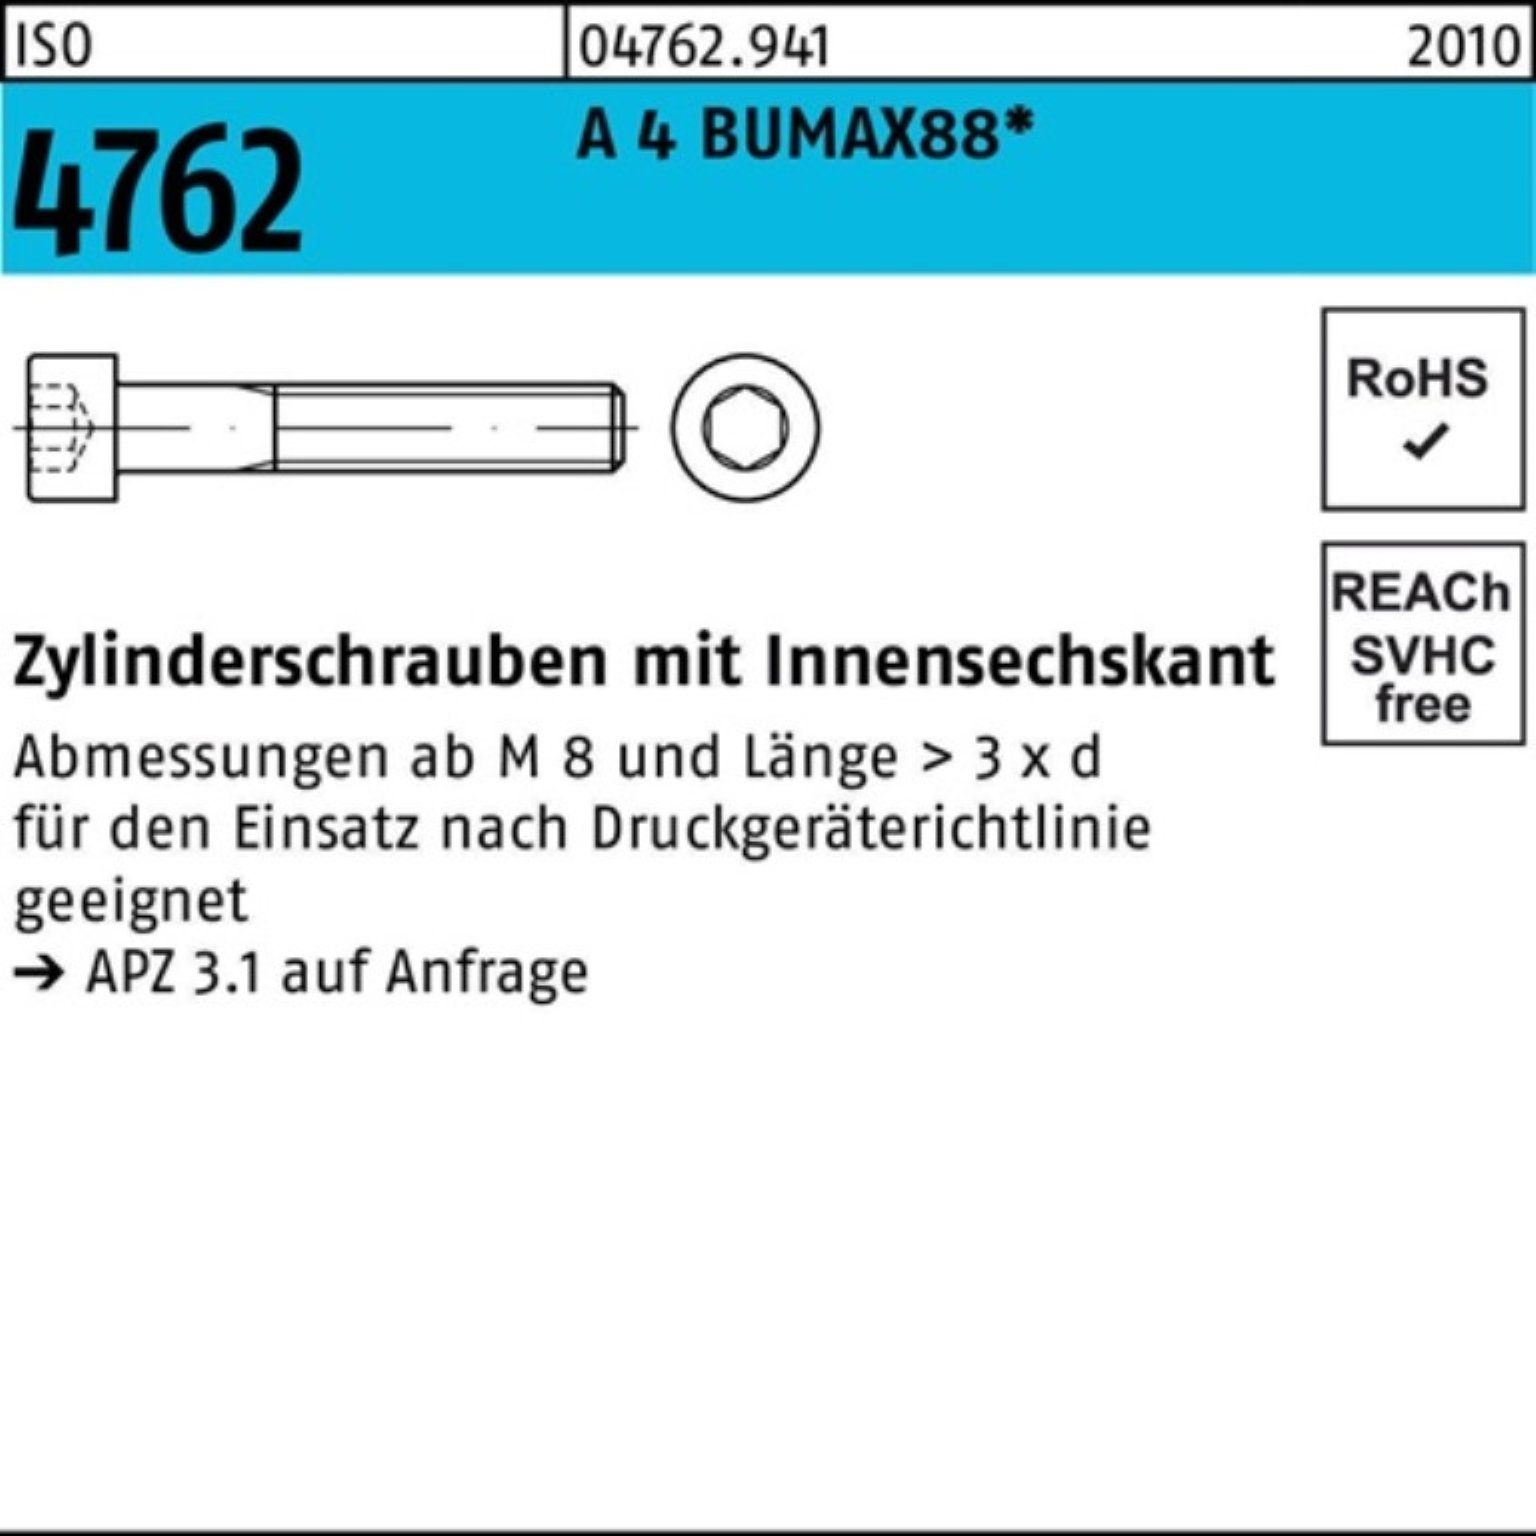 Pack 12 Innen-6kt 500er ISO Zylinderschraube A 500 Zylinderschraube BUMAX88 M3x Bufab 4762 4